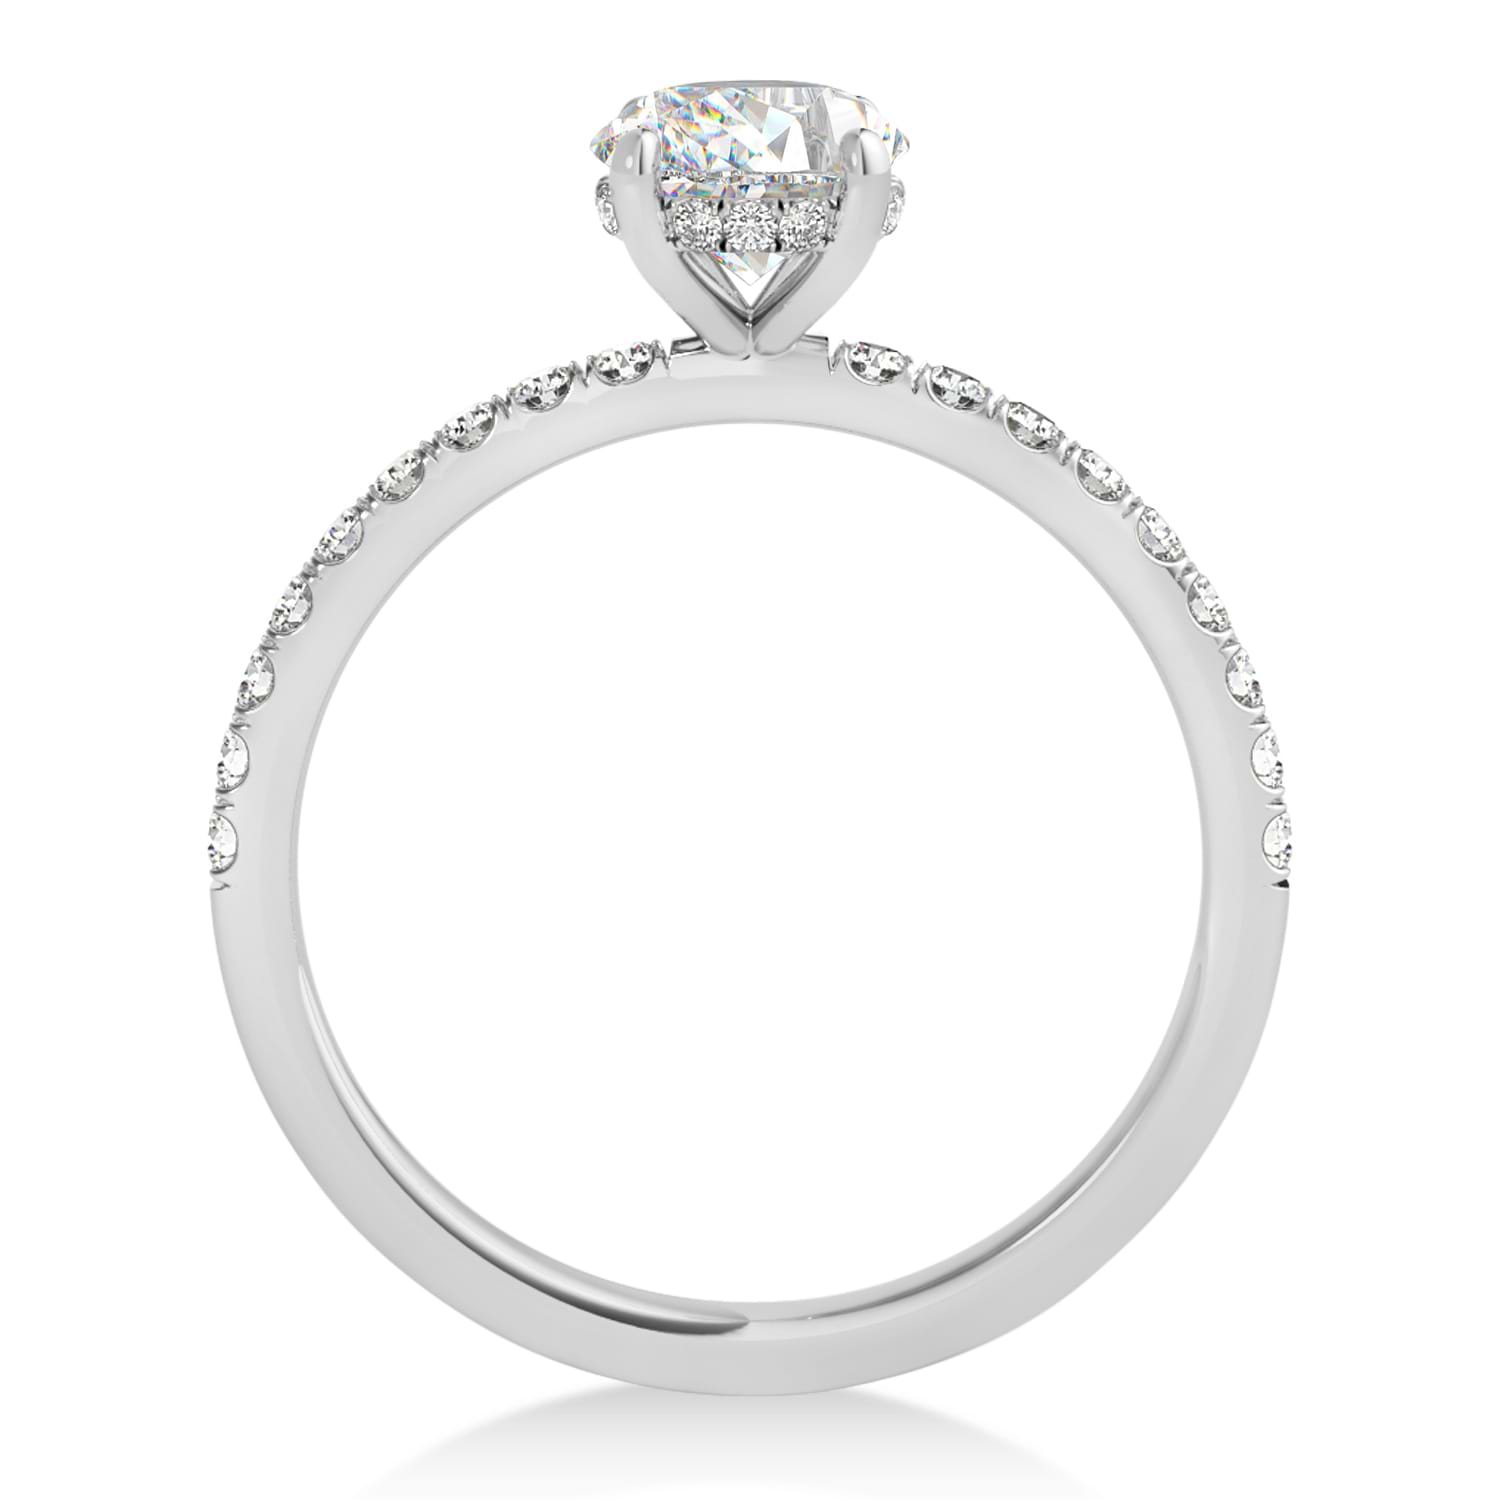 Oval Moissanite & Diamond Single Row Hidden Halo Engagement Ring 14k White Gold (0.68ct)